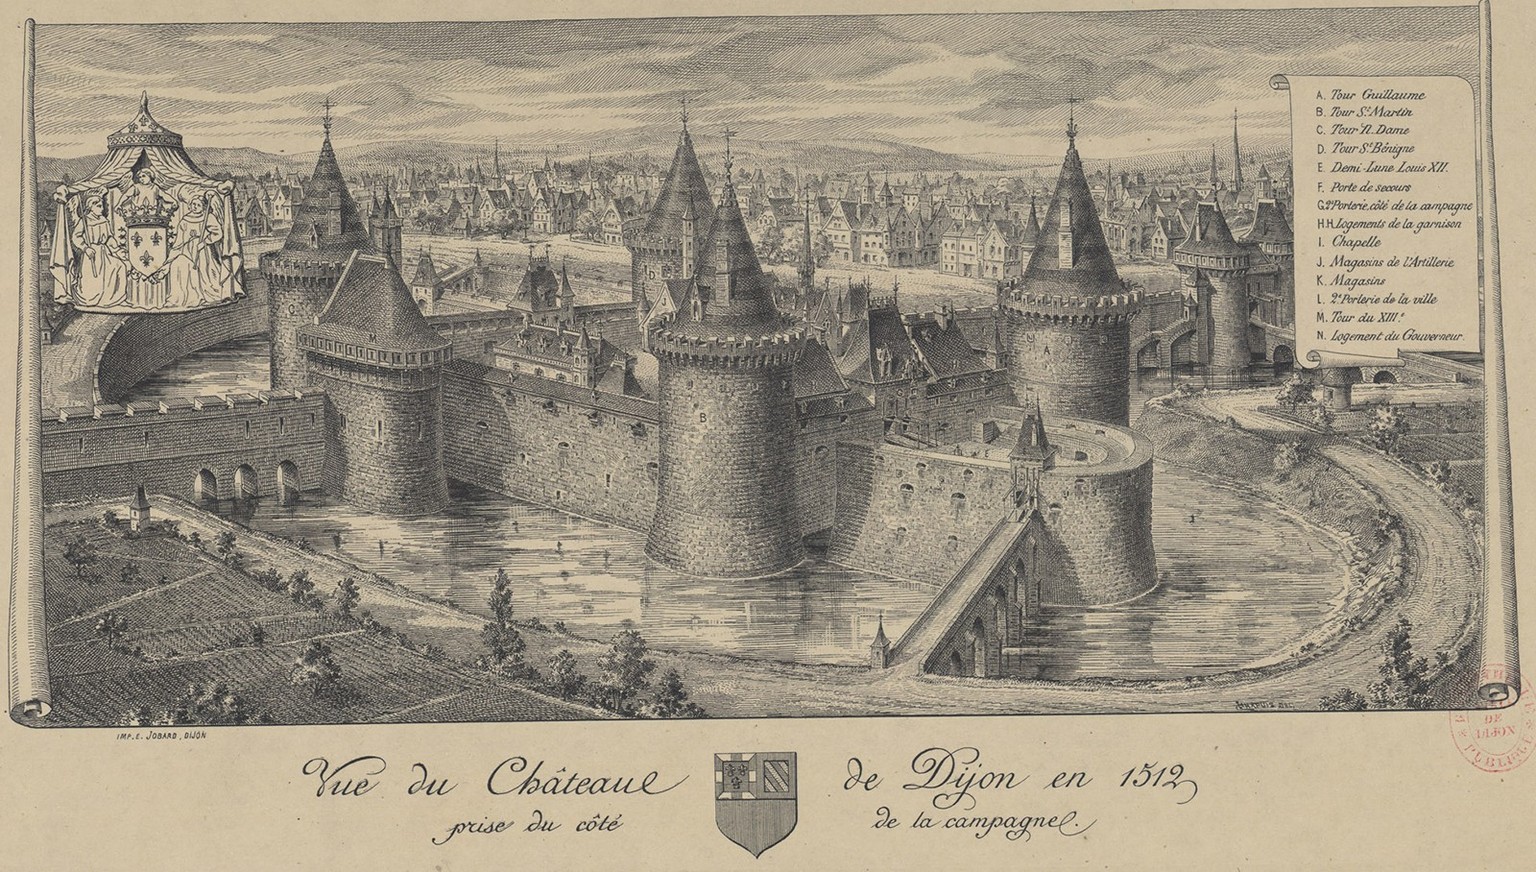 Das Schloss von Dijon um 1512.
http://patrimoine.bm-dijon.fr/pleade/ead.html?c=FR212316101-Images_dijonnaises_L_Est_AS_I_4#!{%22content%22:[%22FR212316101-Images_dijonnaises_L_Est_AS_I_4%22,false,%22% ...